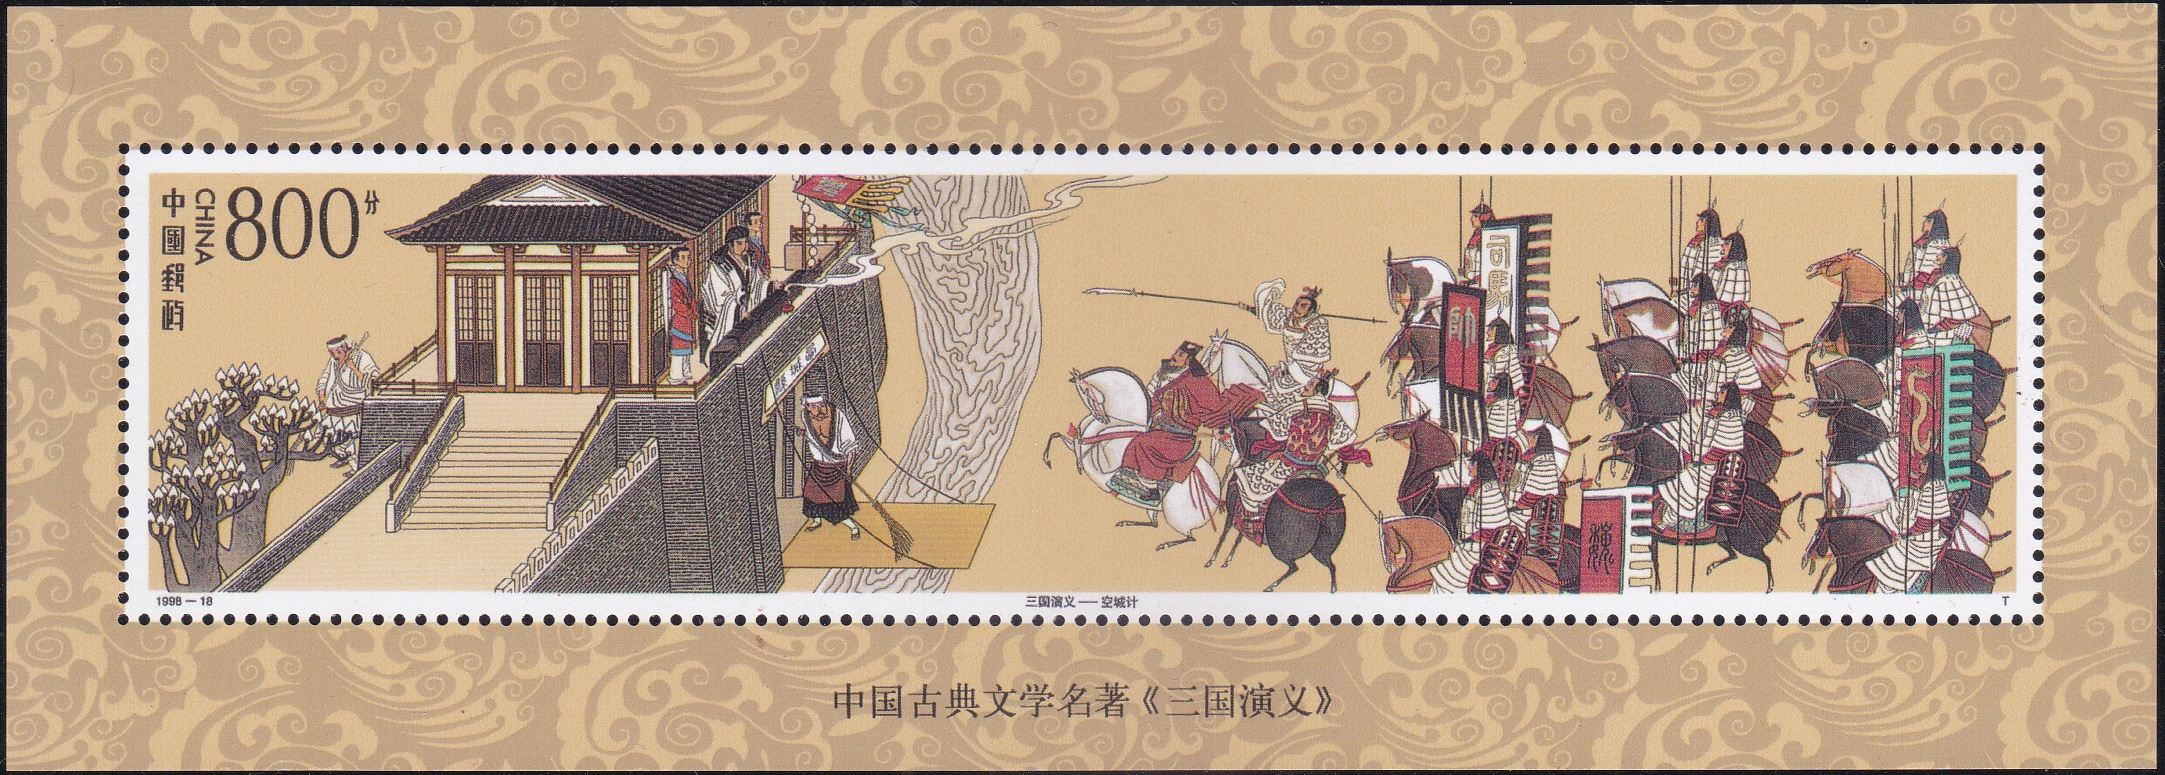 2893 The Stratagem of Empty City [Romance of the Three Kingdoms] - China Souvenir Sheet